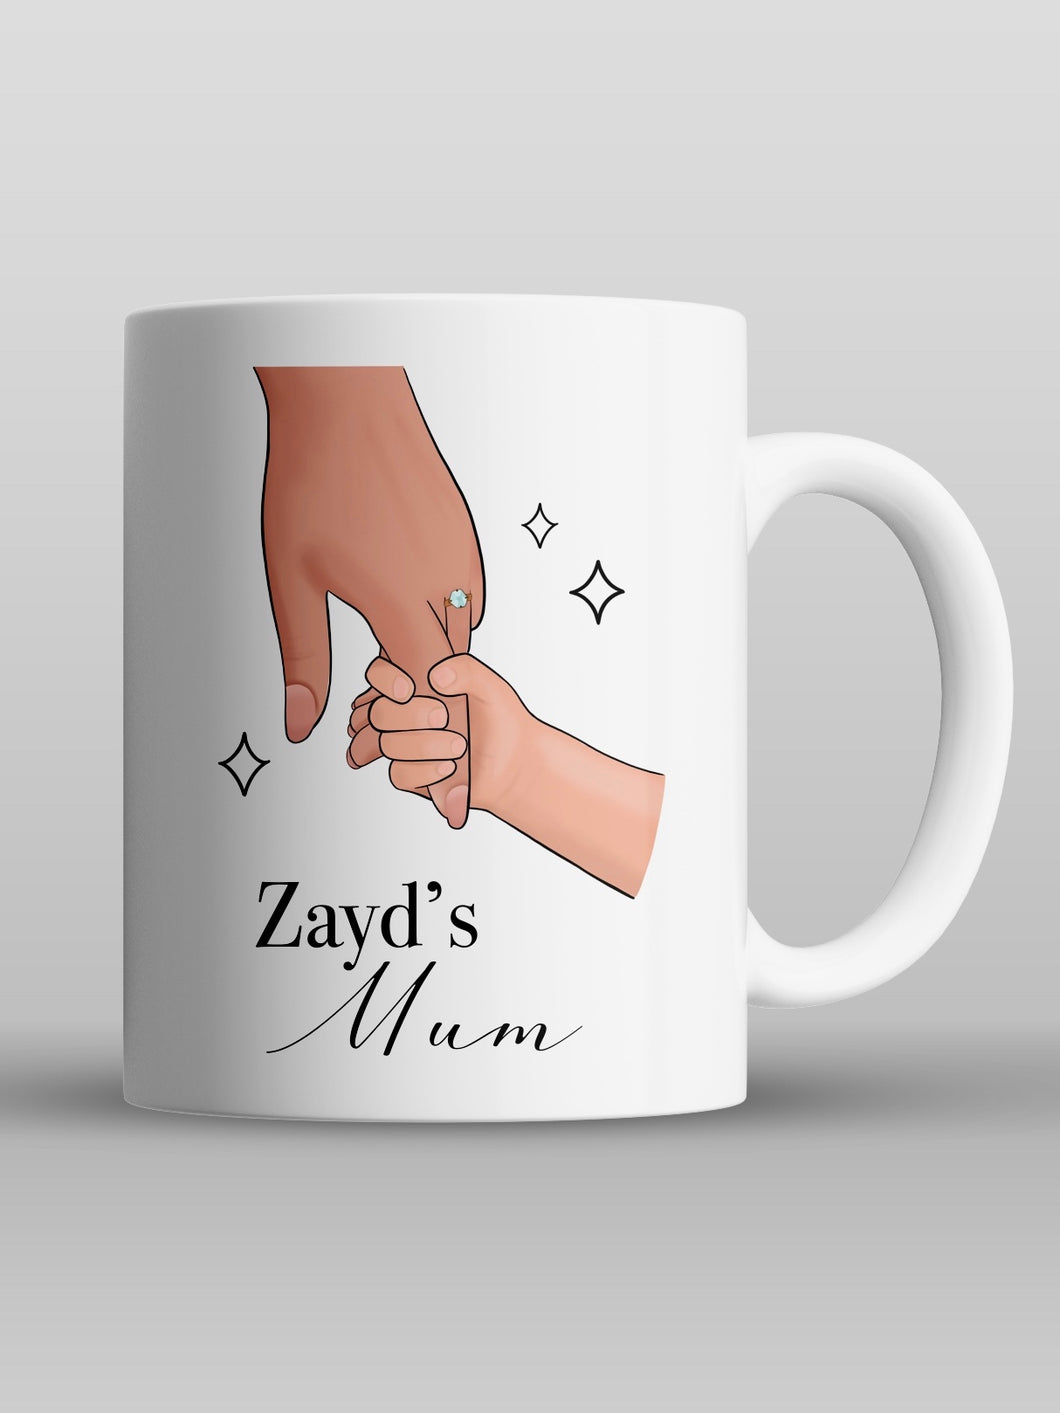 Mum’s Mug - Personalized